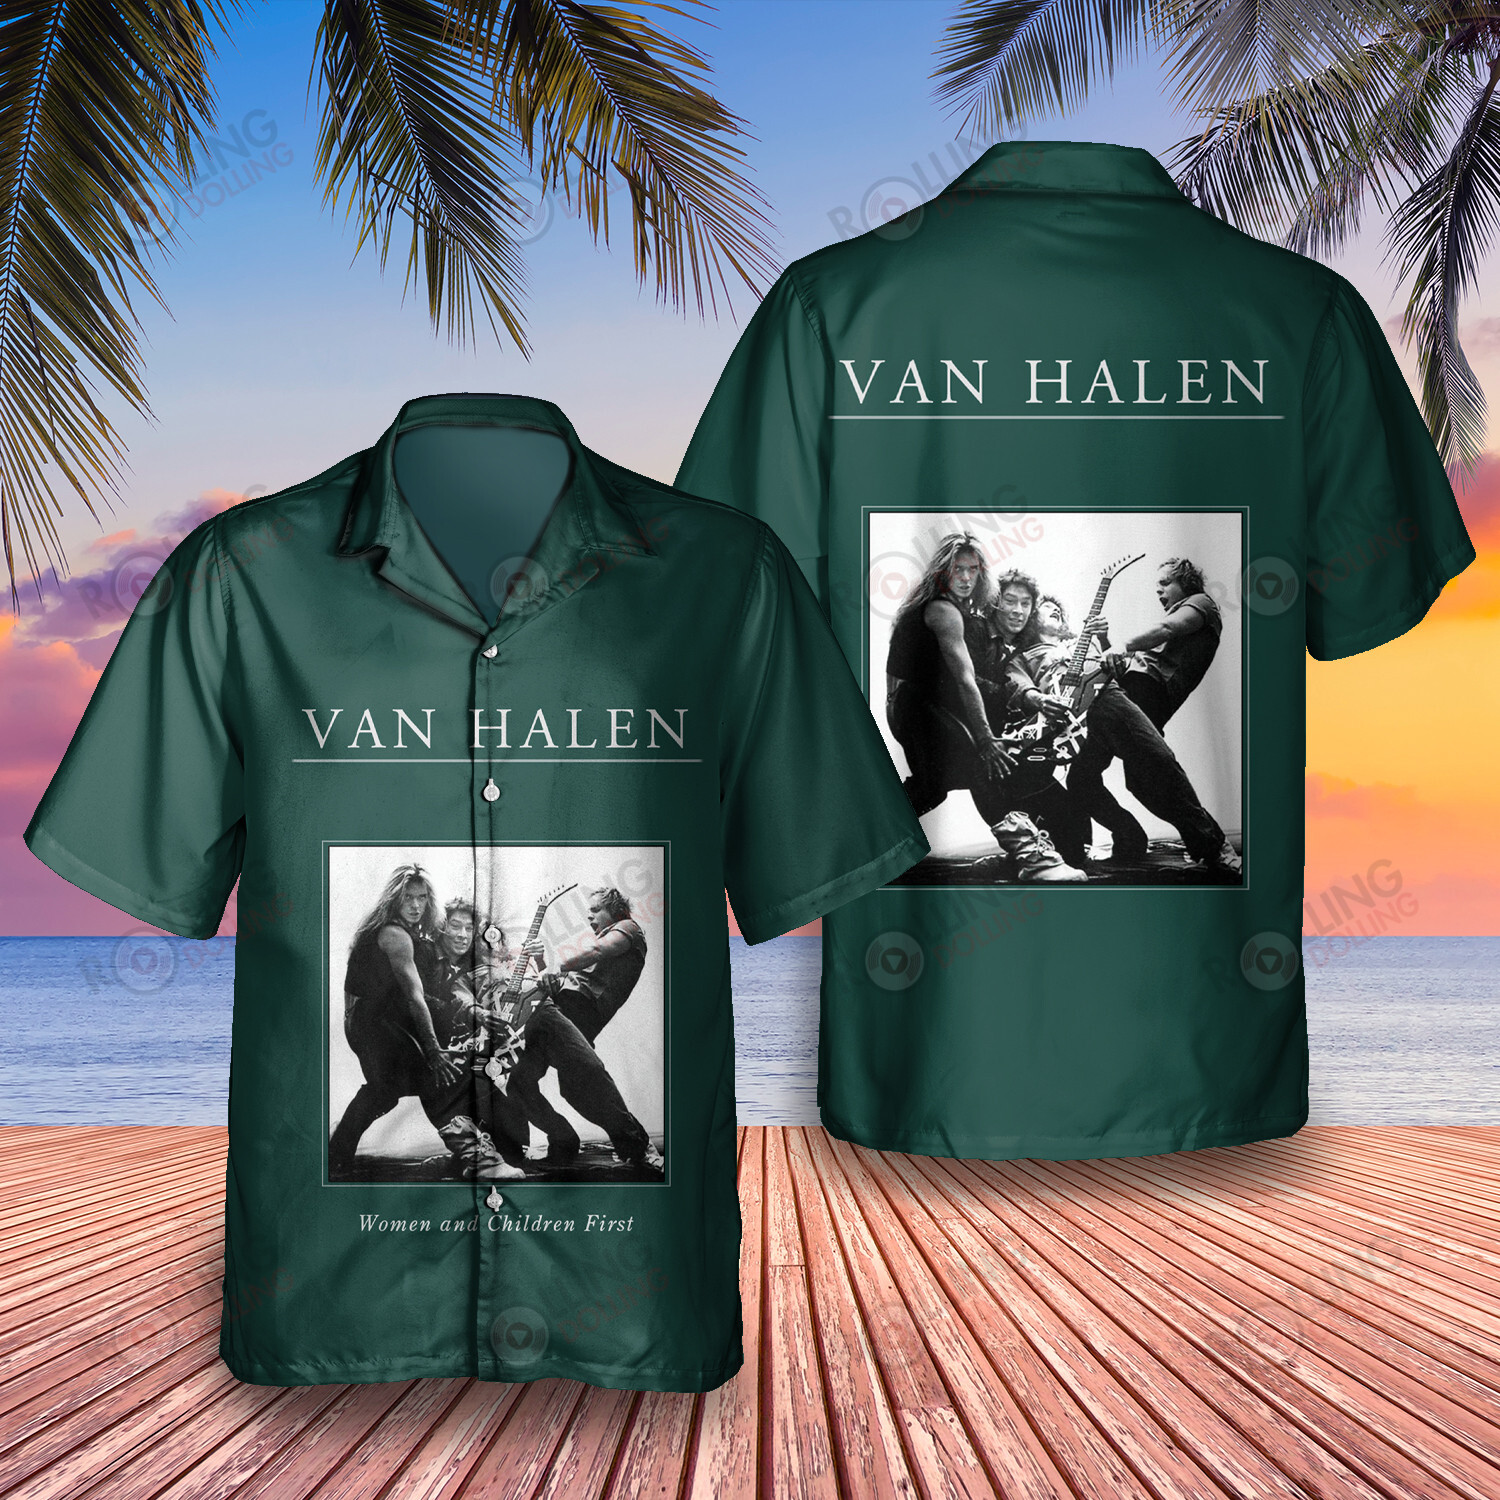 Regardless of their style, you will feel comfortable wearing Hawaiian Shirt 6